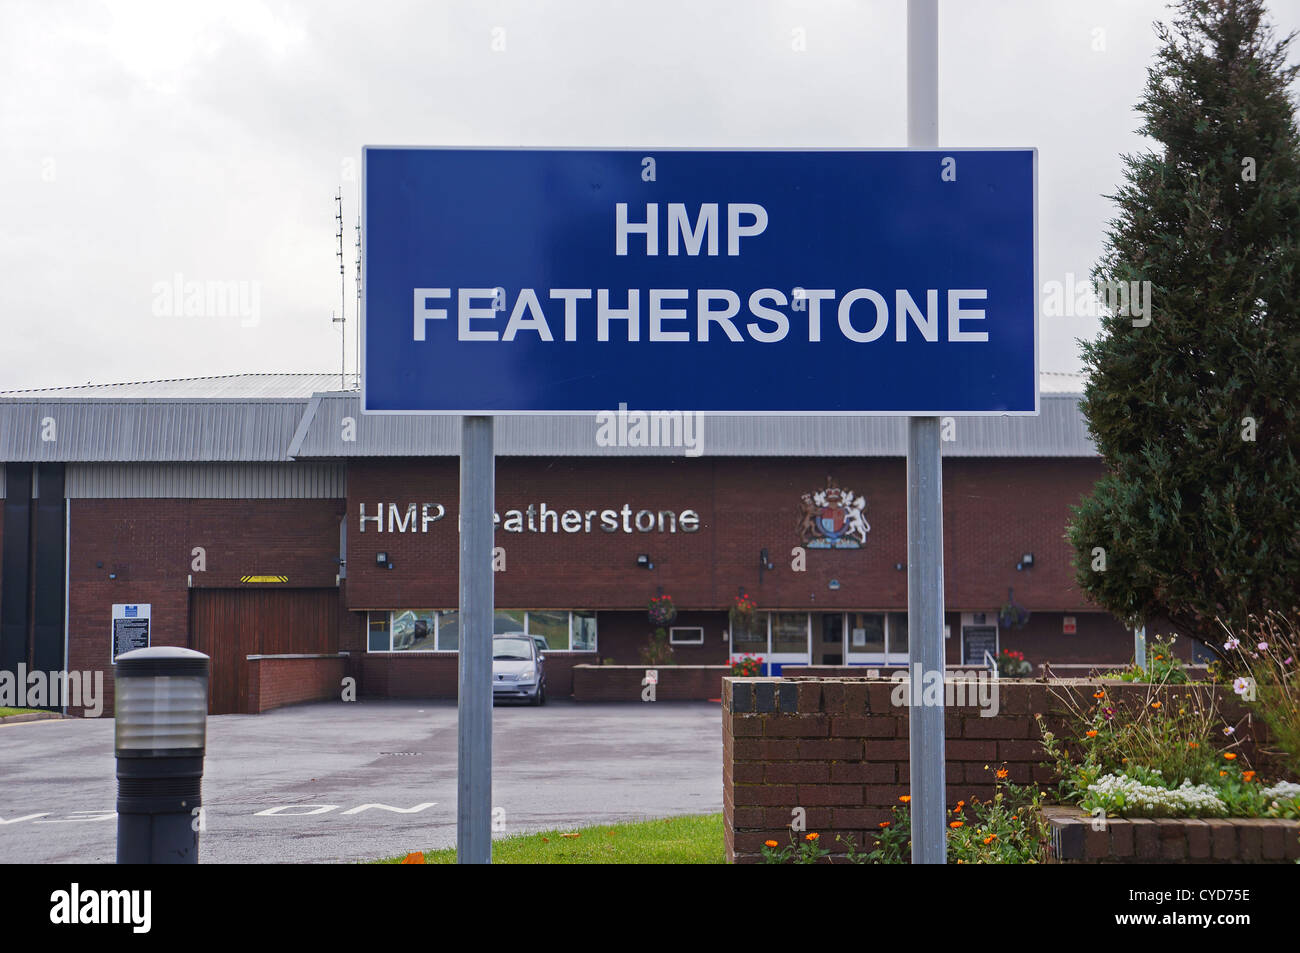 HMP prison featherstone Stock Photo